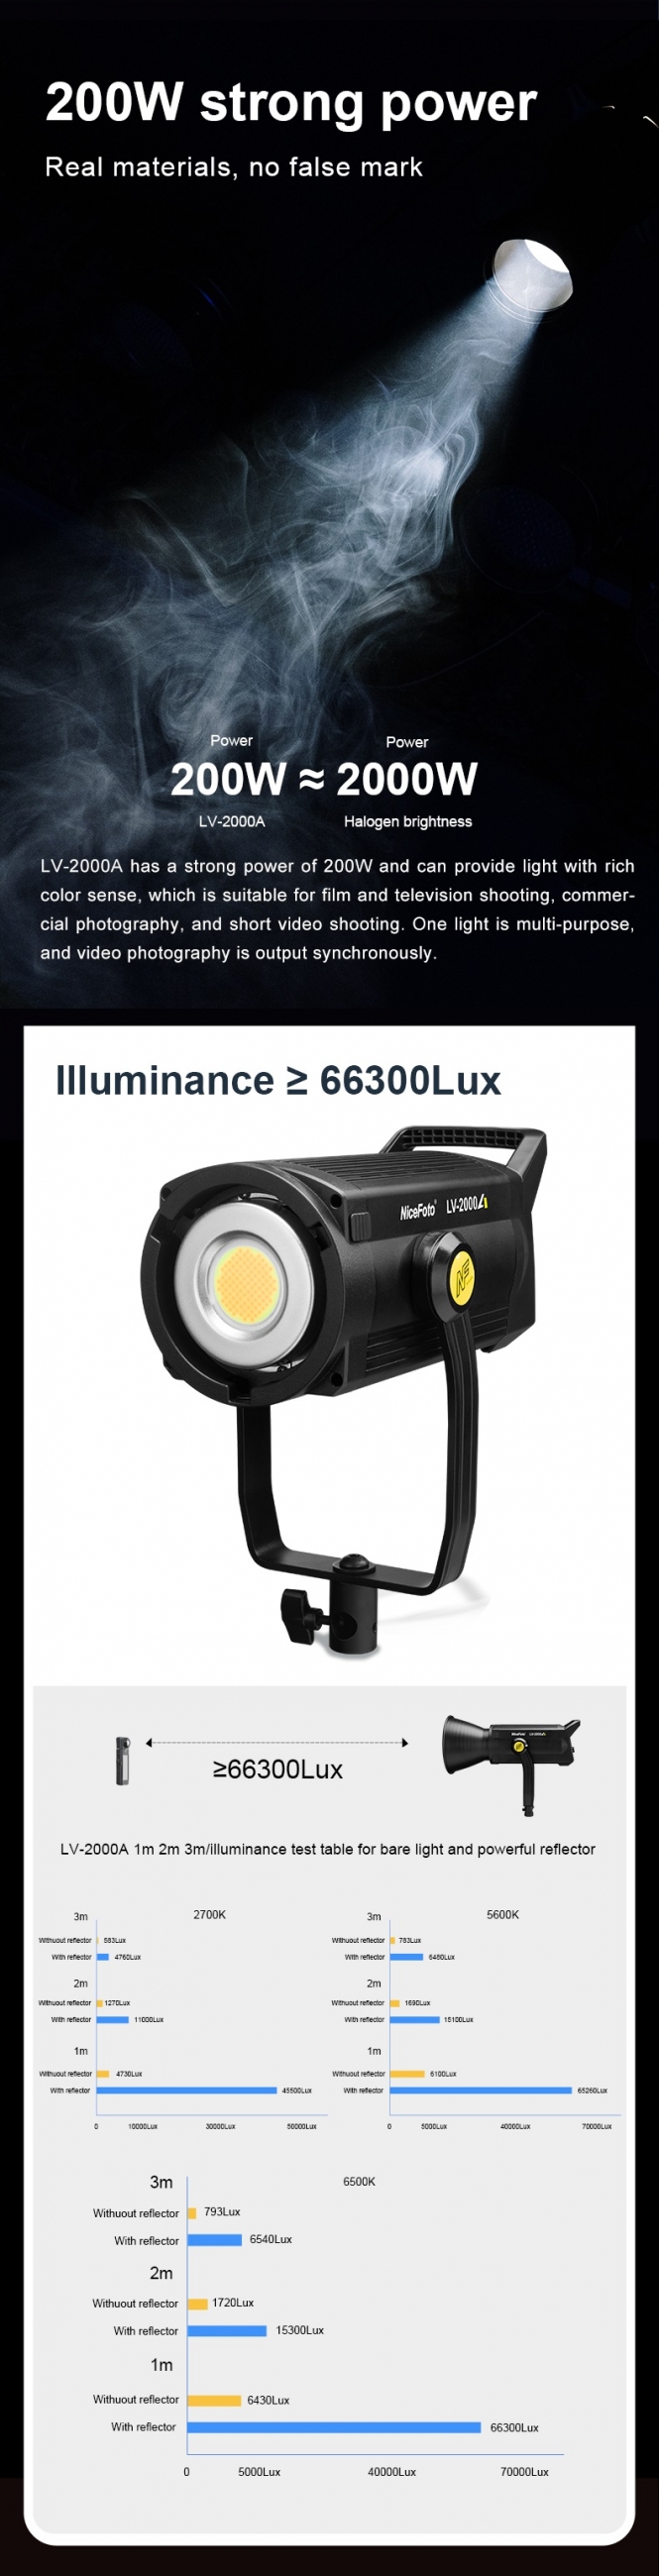 NiceFoto LV-2000A LED VideoLight 200W